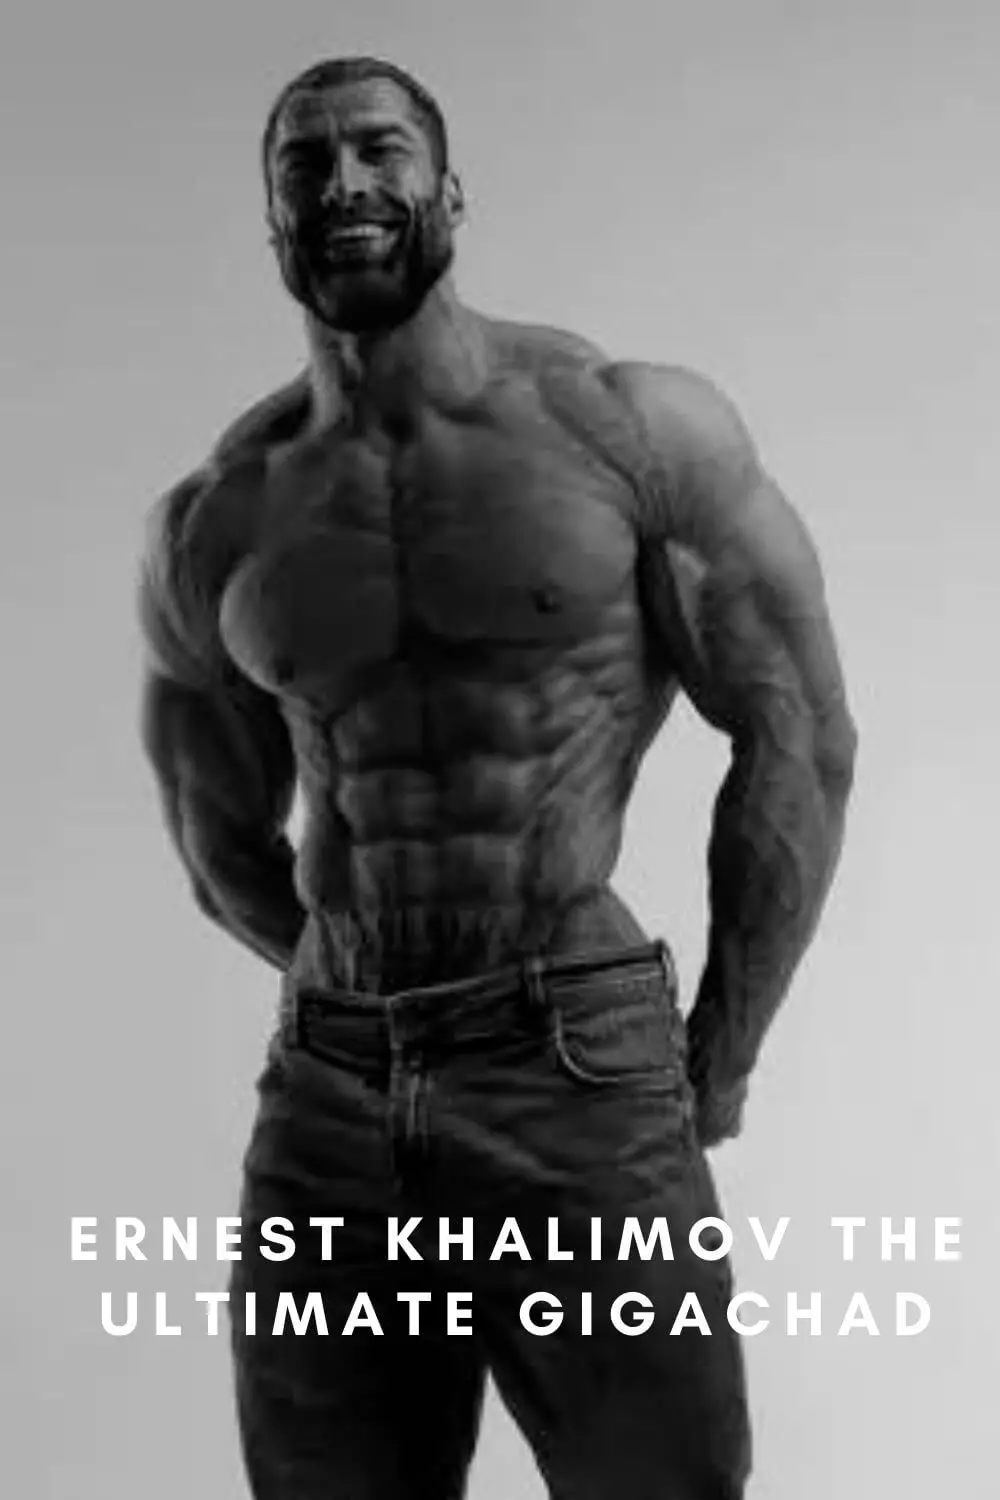 Ernest Khalimov